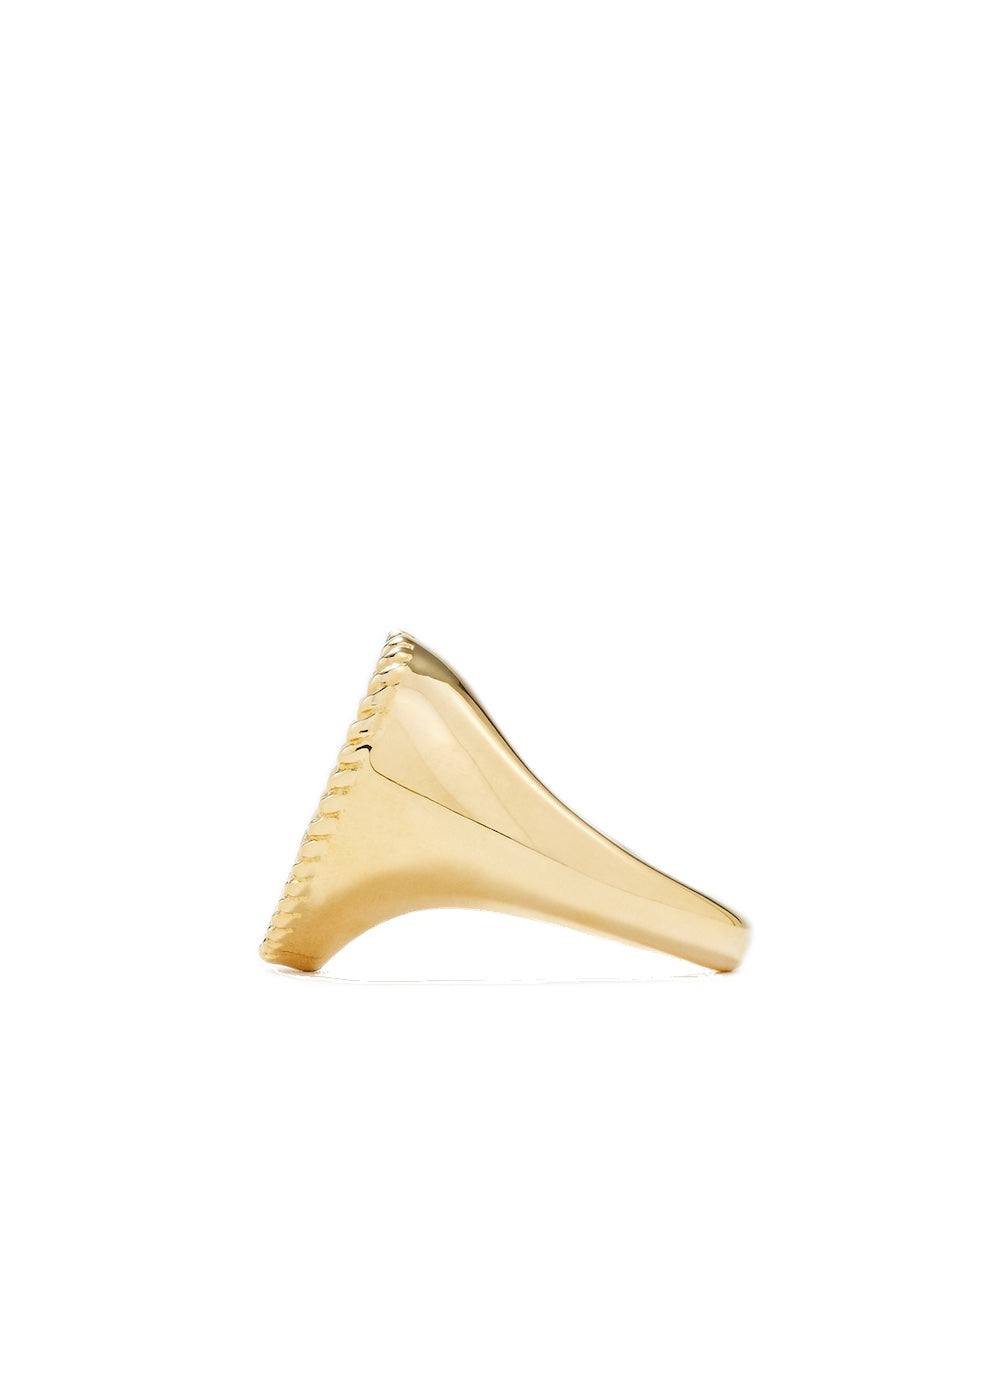 Chevalière Ovale 9k yellow gold, diamond and pinticana signet ring